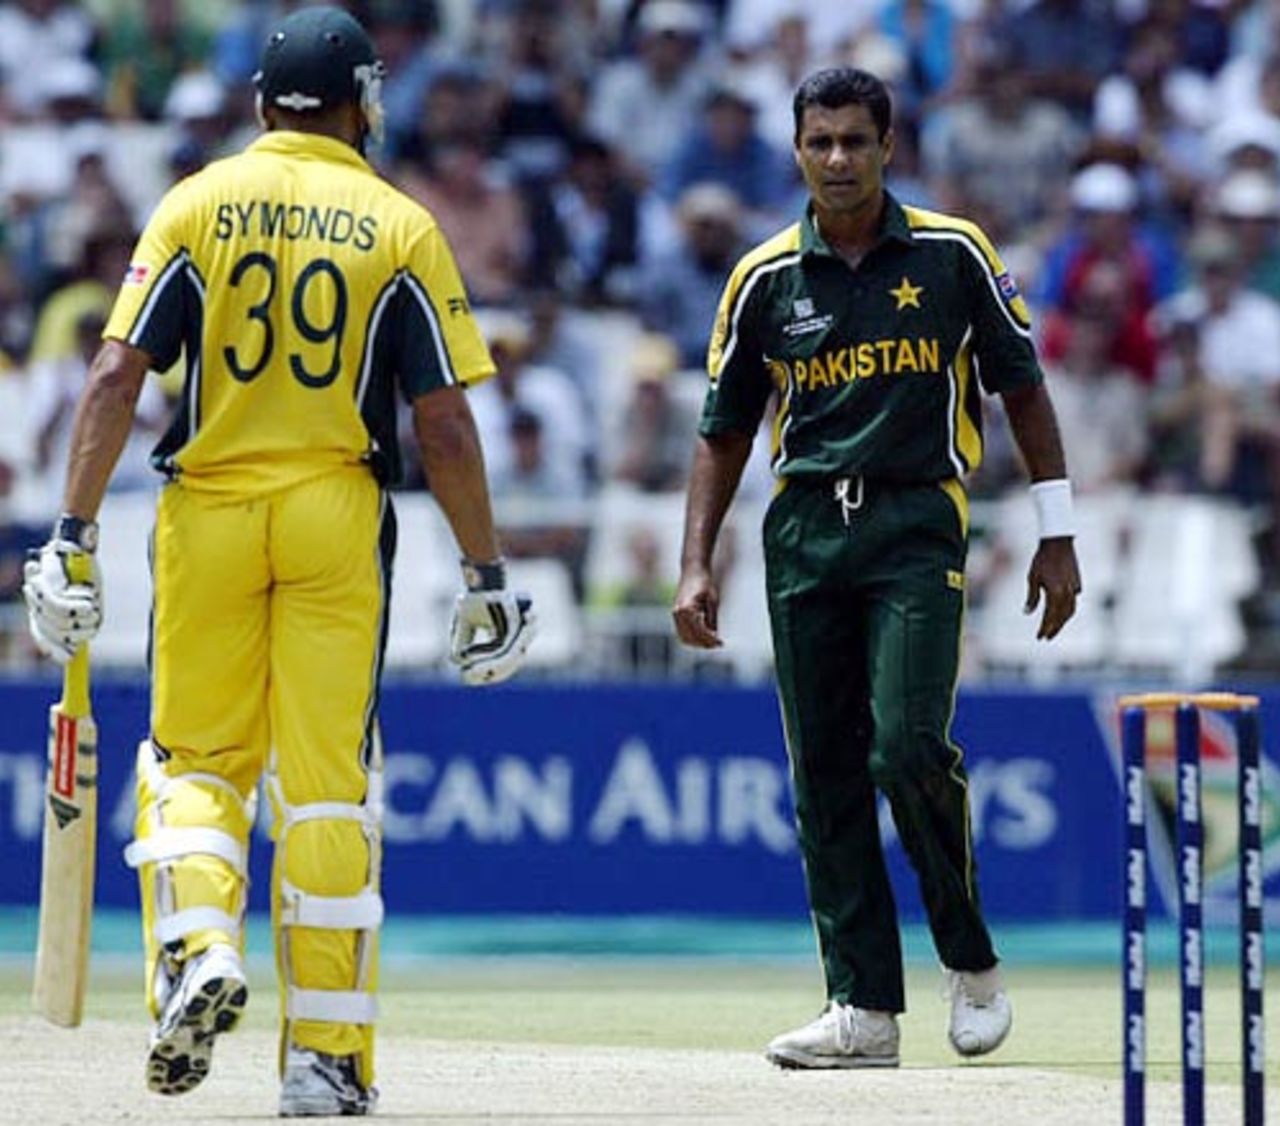 World Cup, 2003 - Australia v Pakistan at Johannesburg, 11 Feb 2003